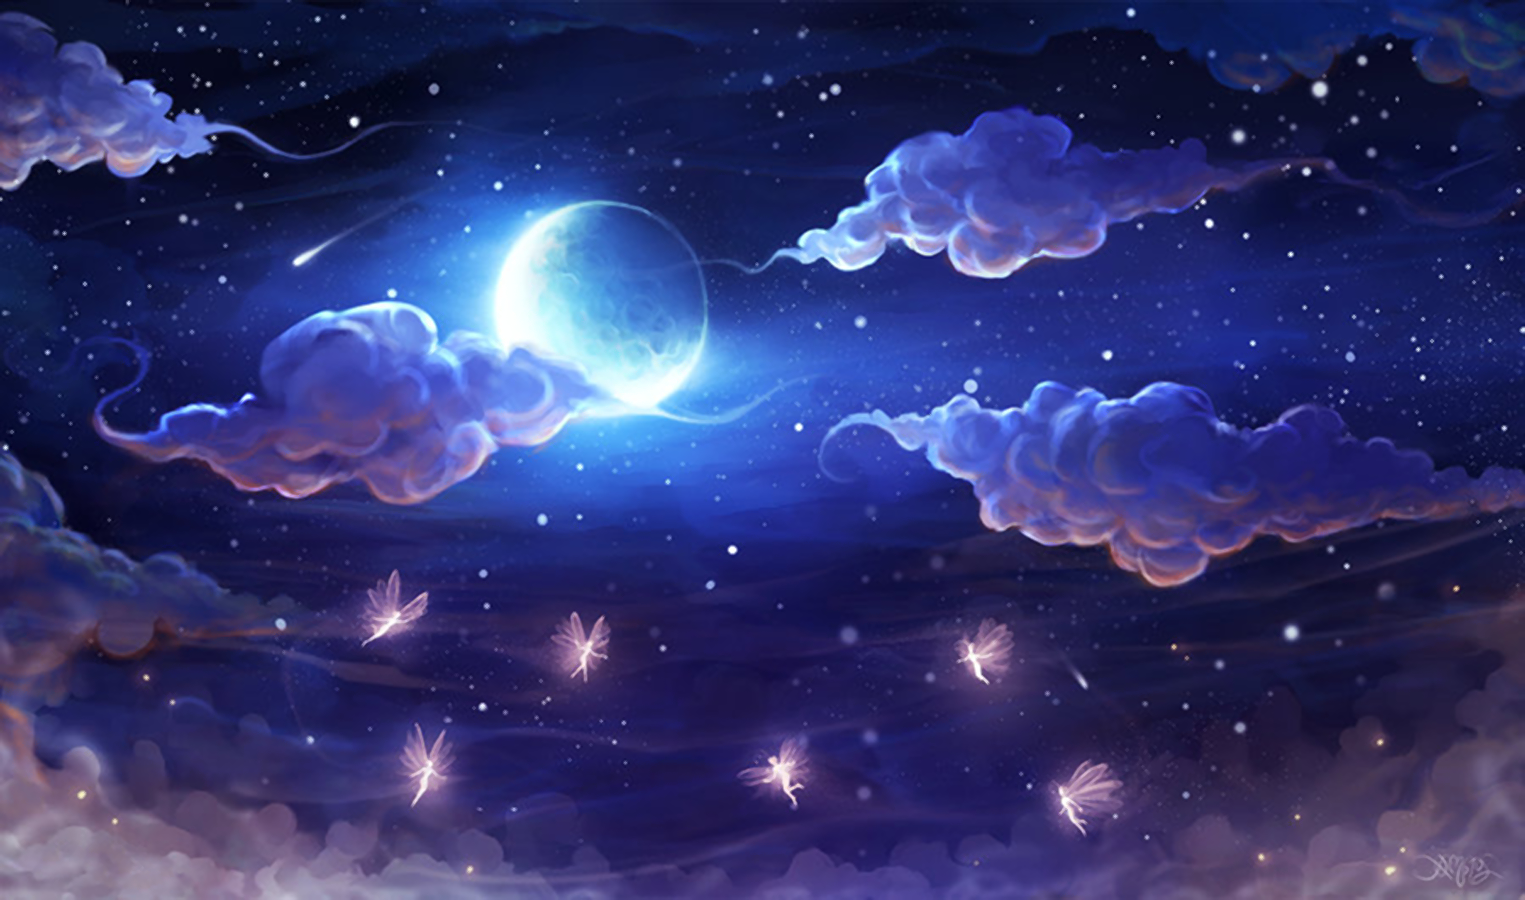 Fantasy Night Sky by Christos Karapanos